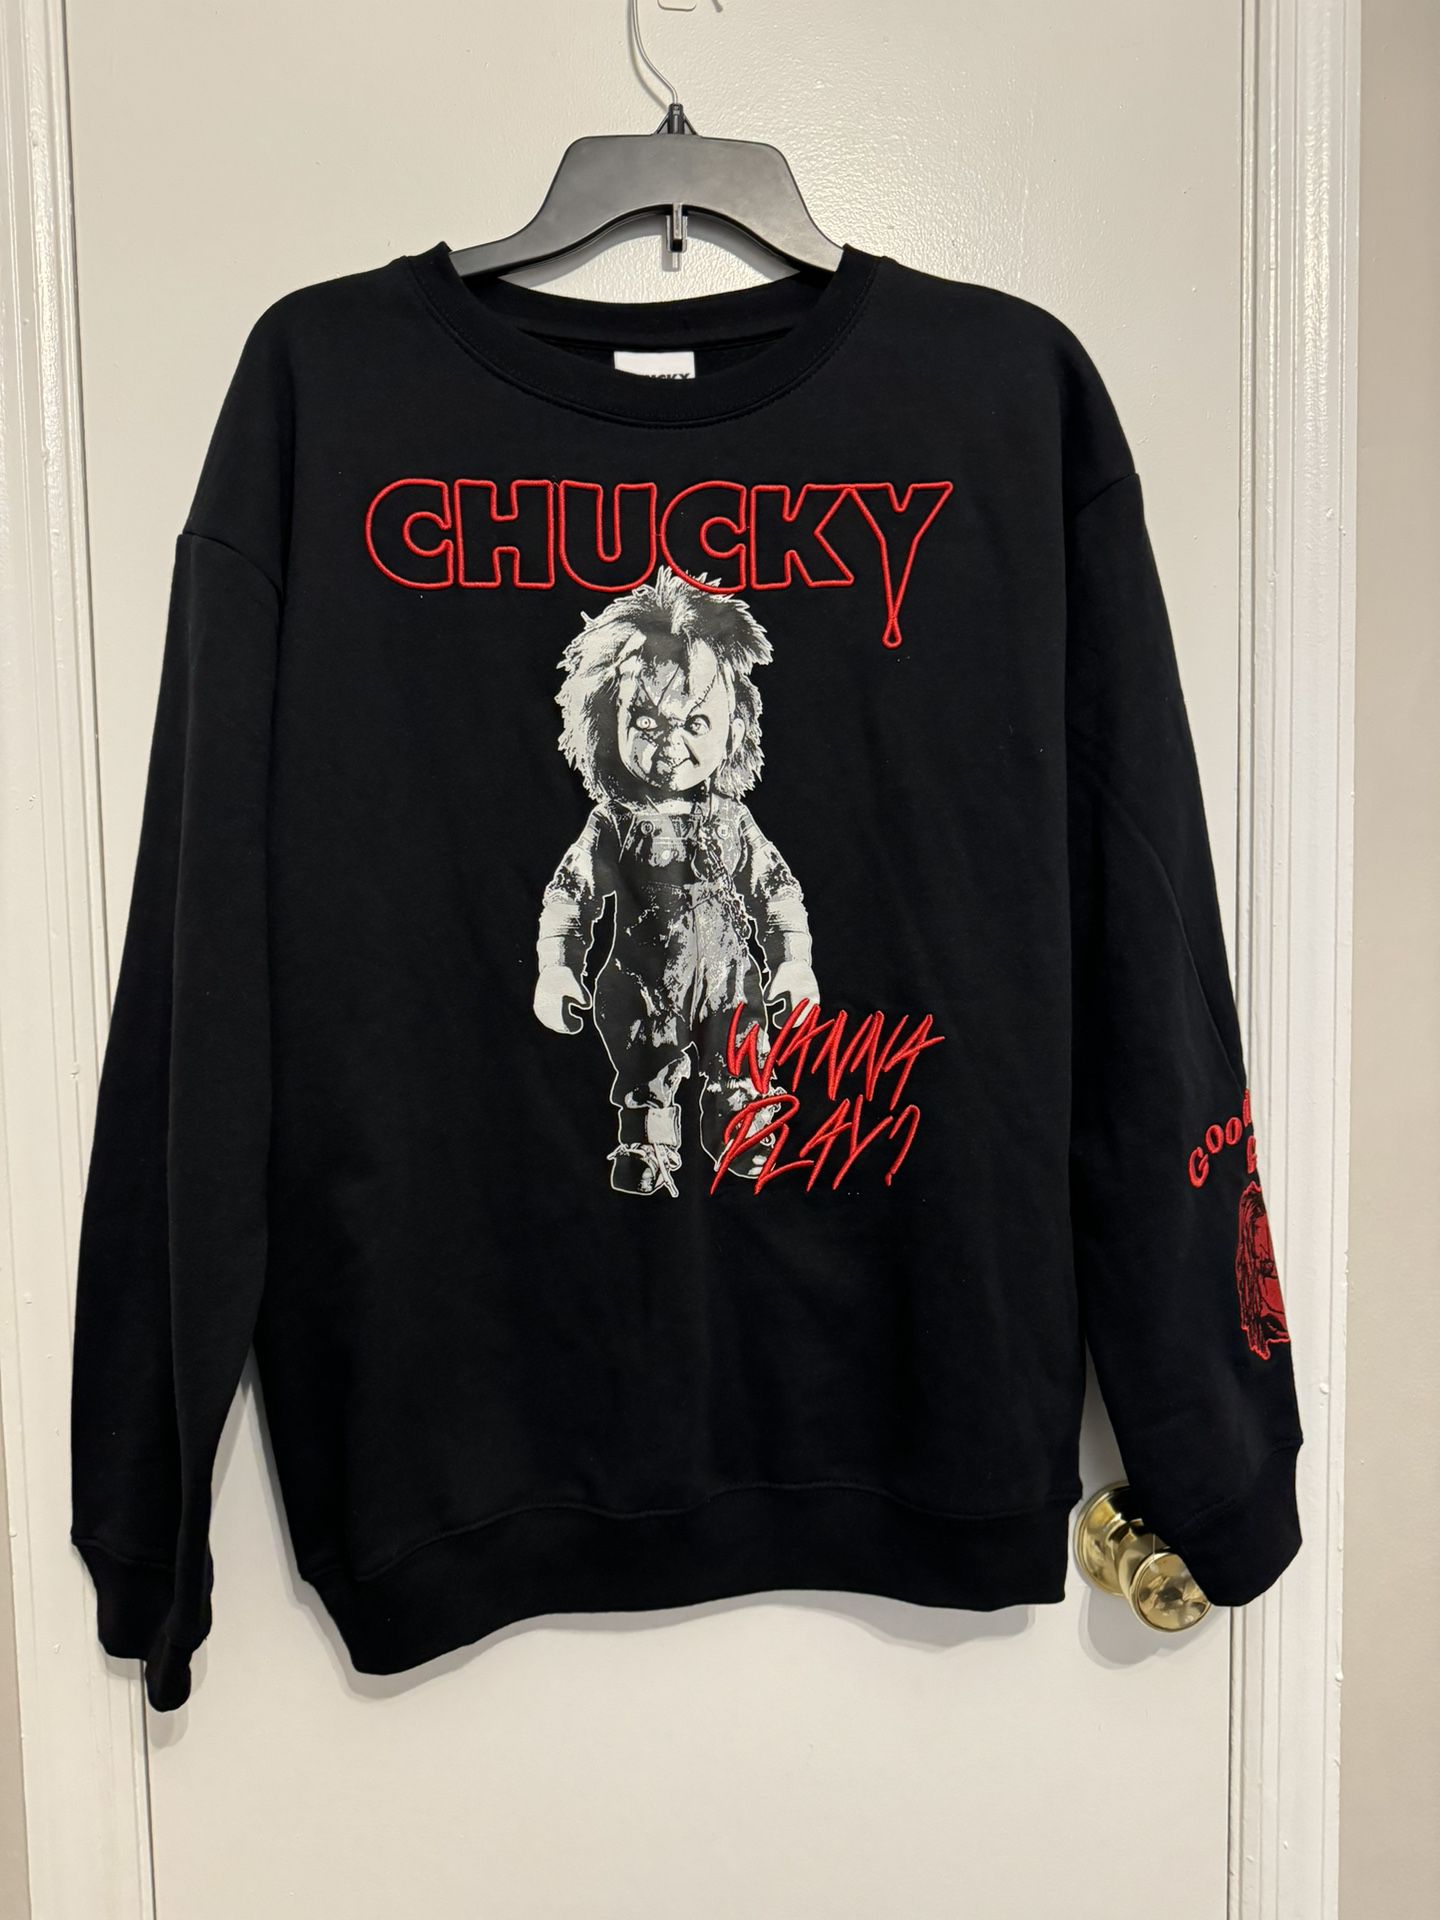 Chucky Sweatshirt Size Small